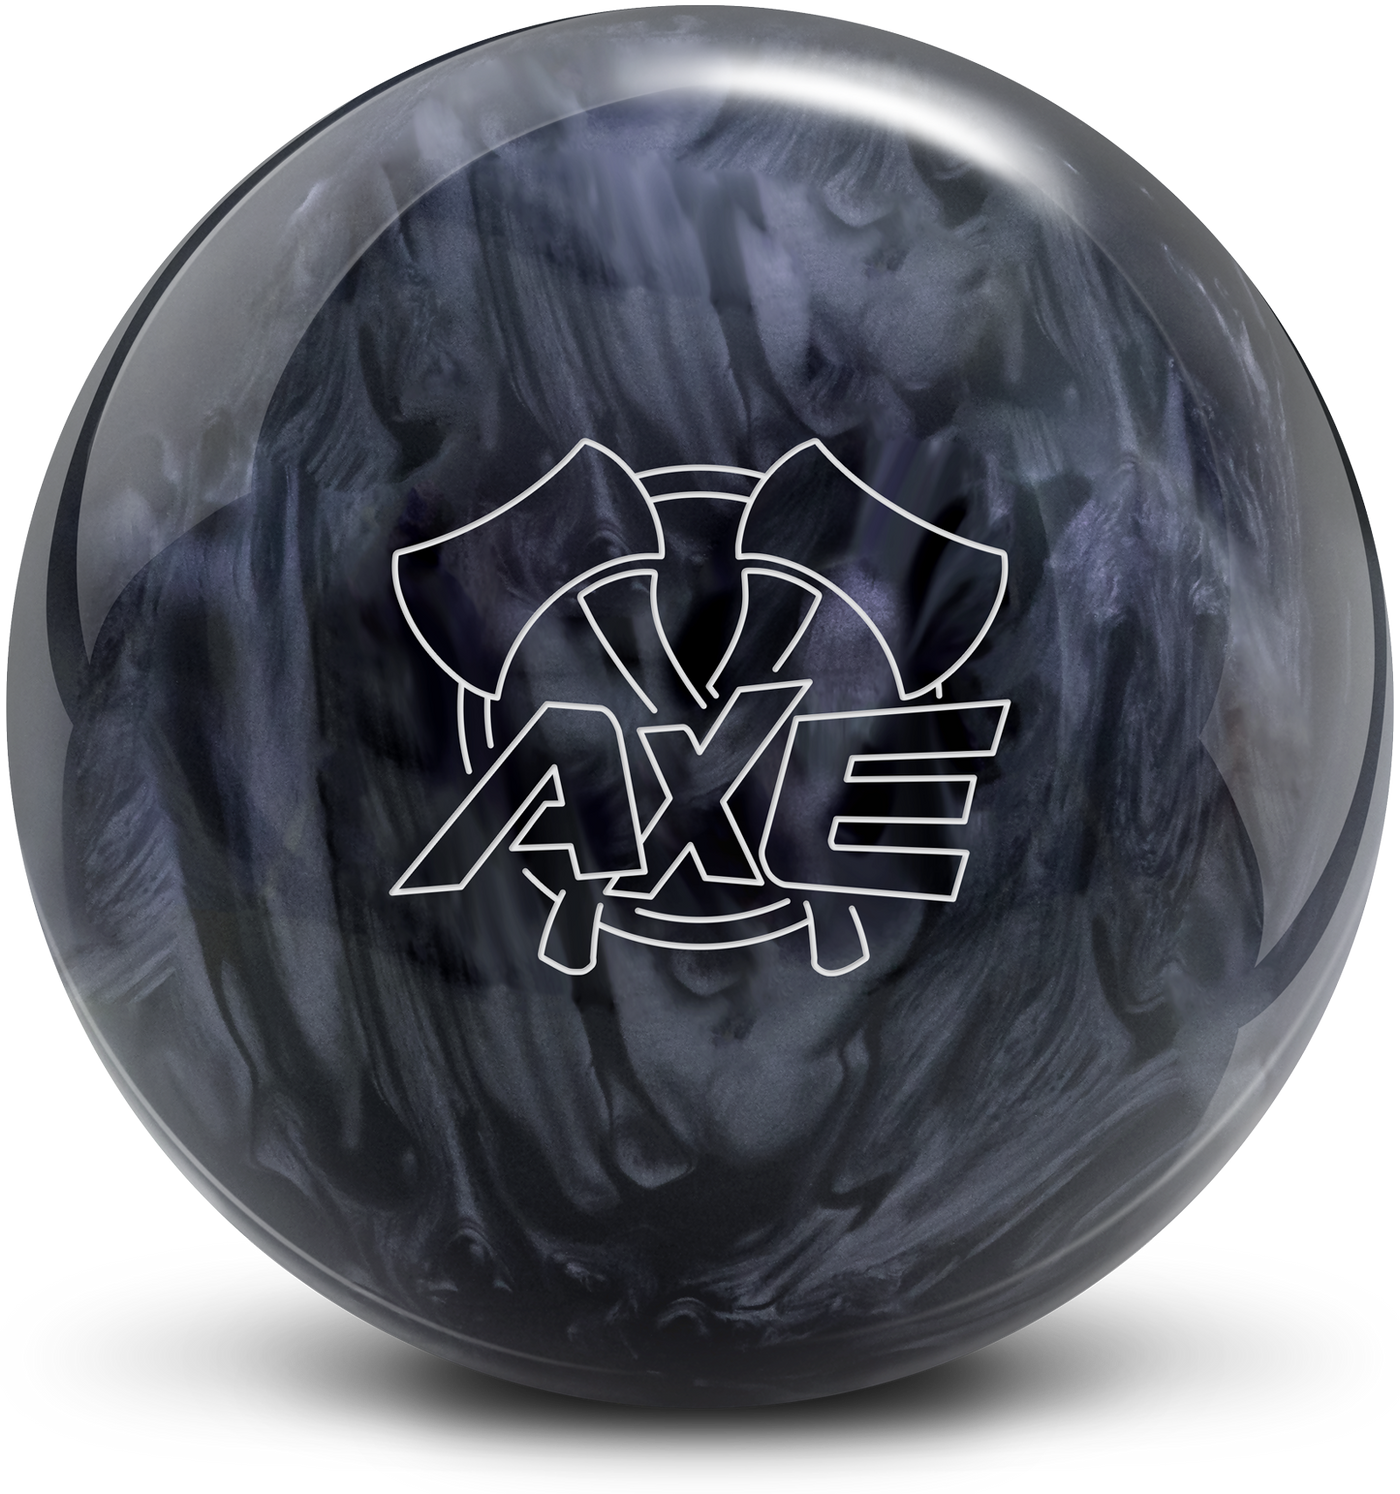 AXE Black Smoke bowling ball